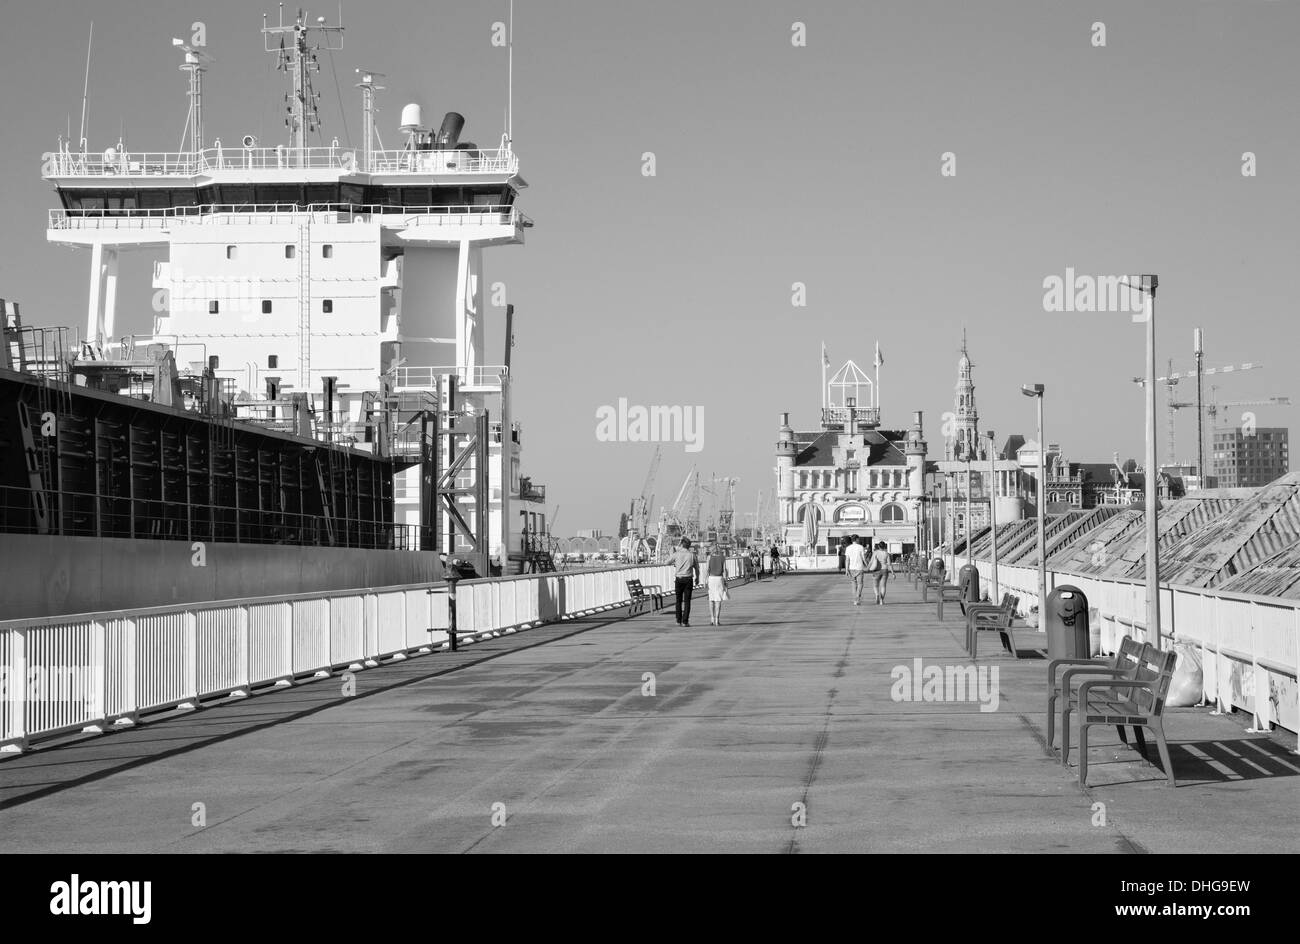 Amberes, Bélgica - 5 de septiembre: Paseo Marítimo y grandes barcos de carga en Septiembre 5, 2013 en Antwerp, Bélgica. Foto de stock